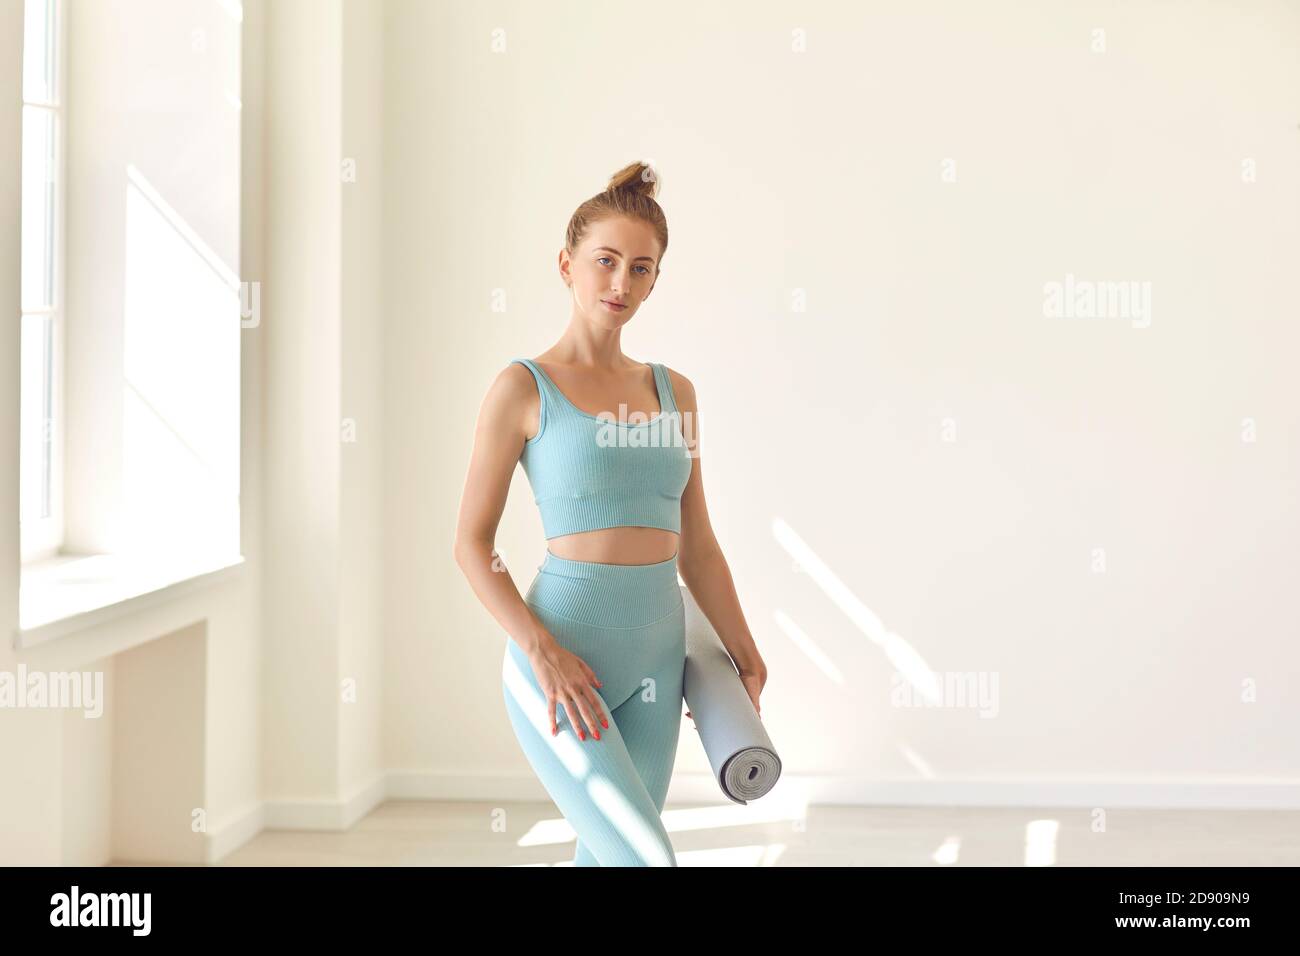 Junge Frau in eng anliegender Sportbekleidung, die im Fitnessstudio Yoga hält Matte in der Hand Stockfoto